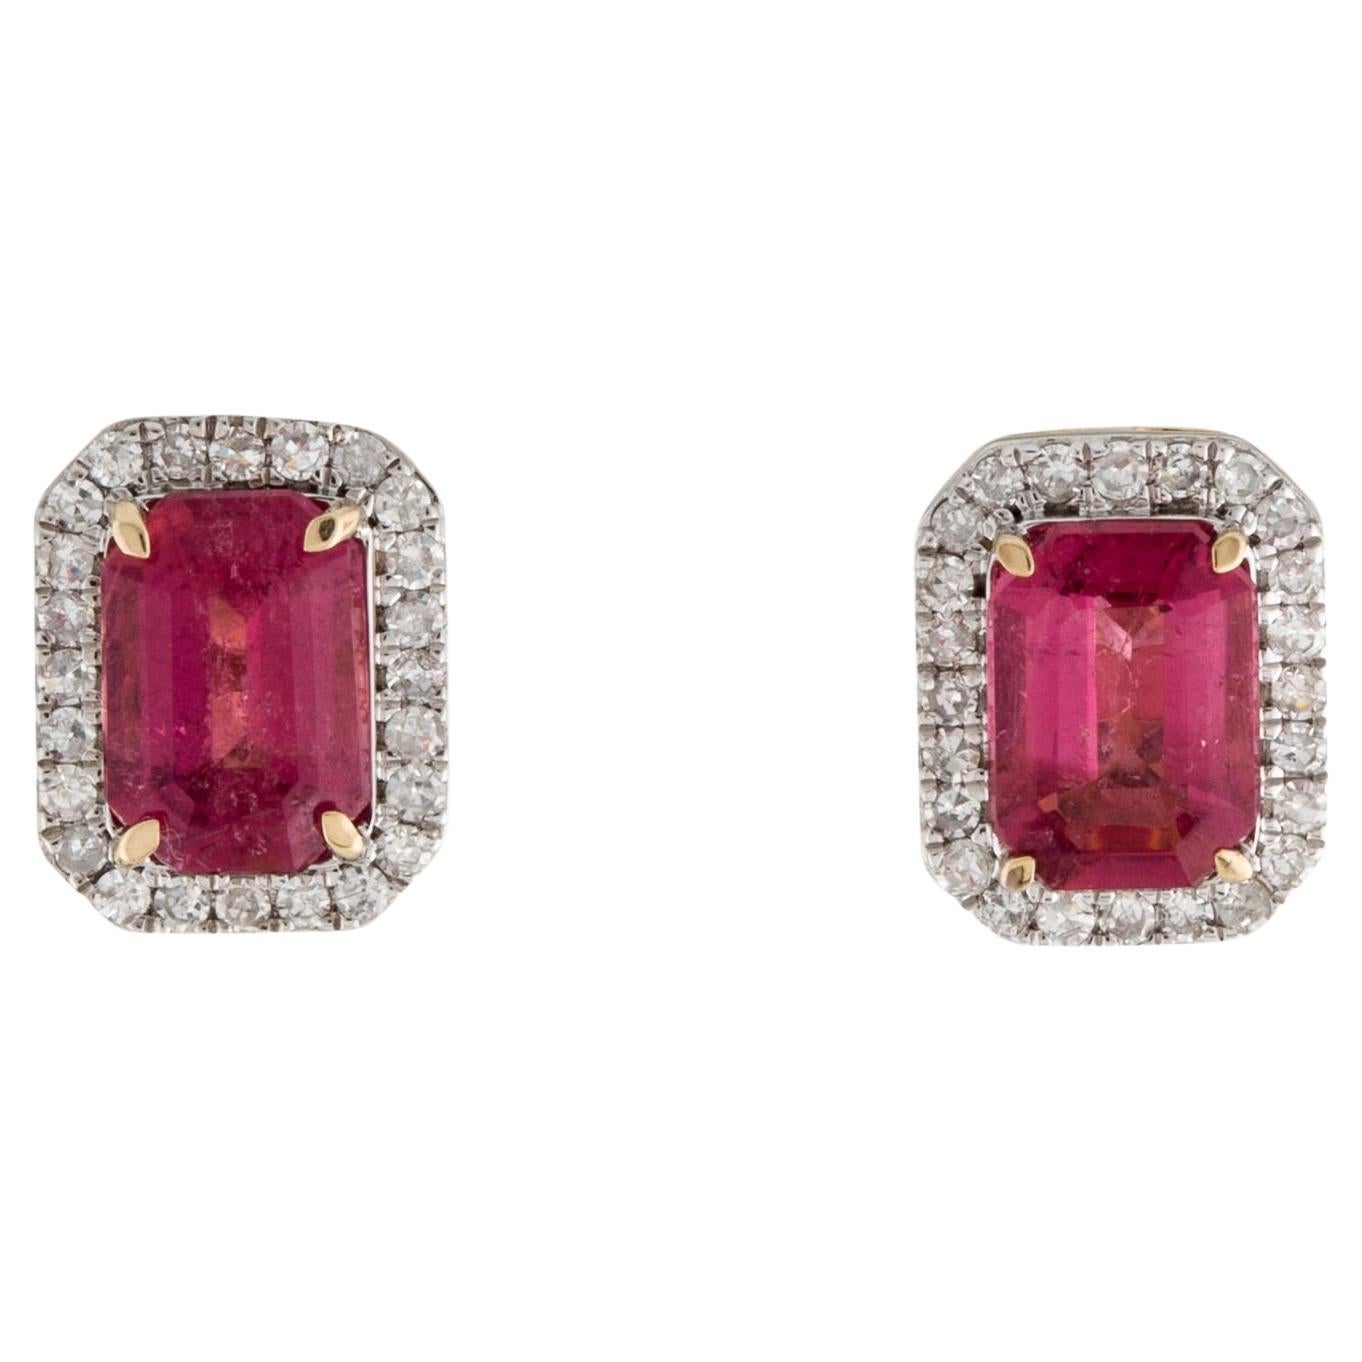 Gorgeous 14K 2.12ctw Tourmaline Studs - Stunning Gemstone Earrings For Sale